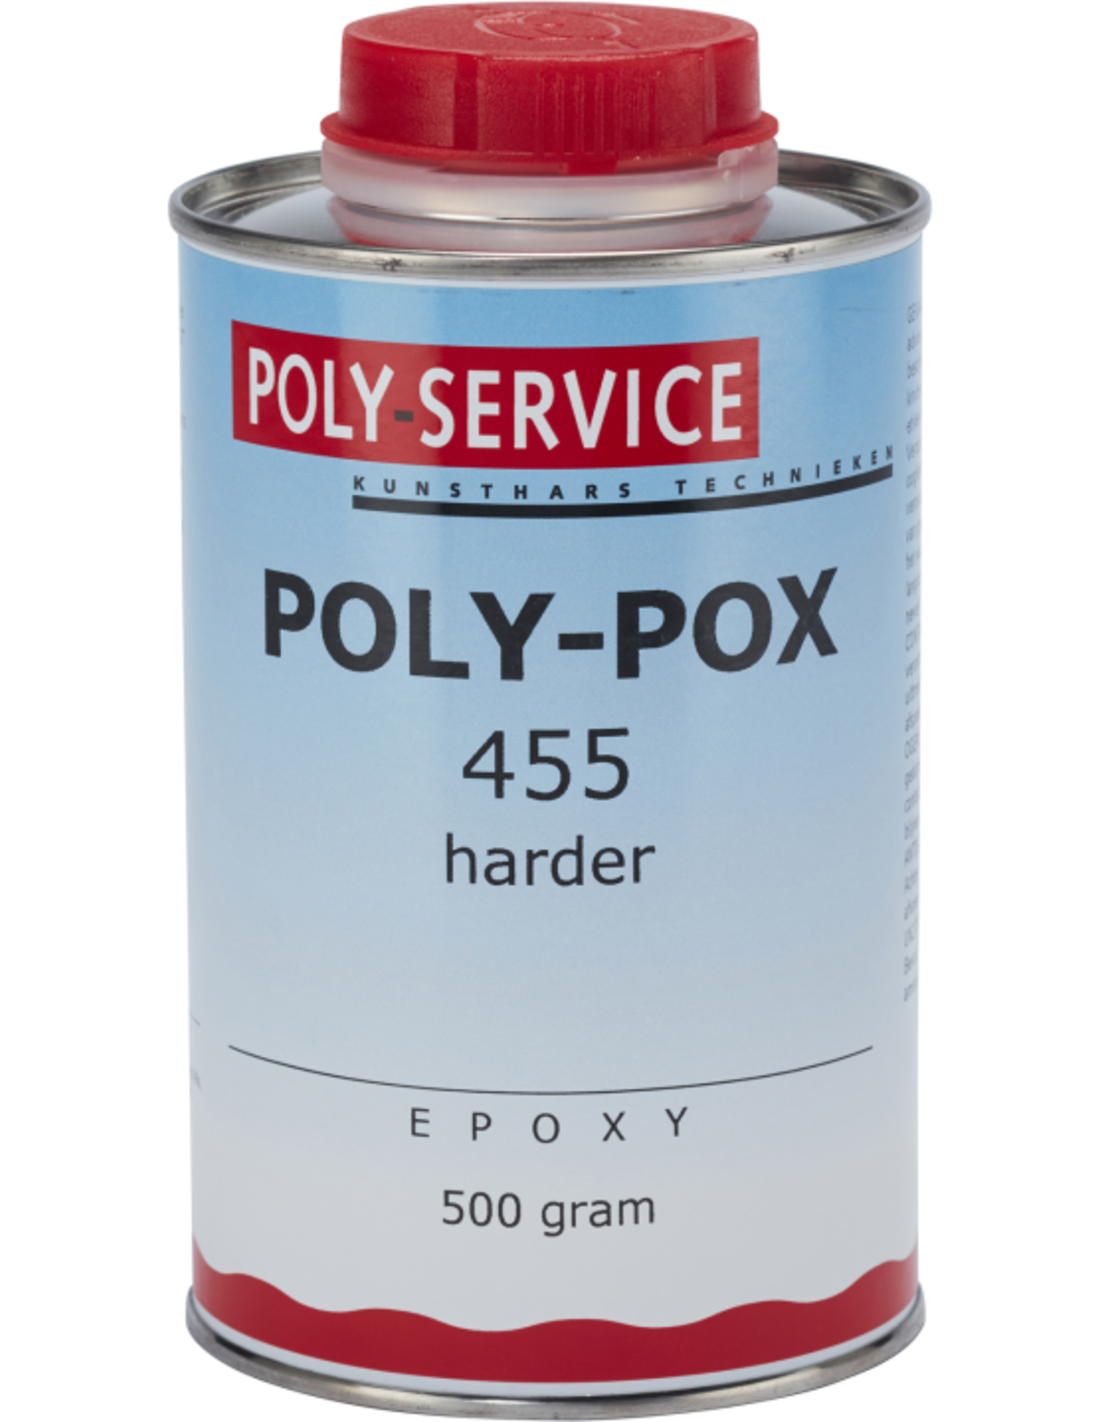 Poly-pox-455-epoxy-harder.png